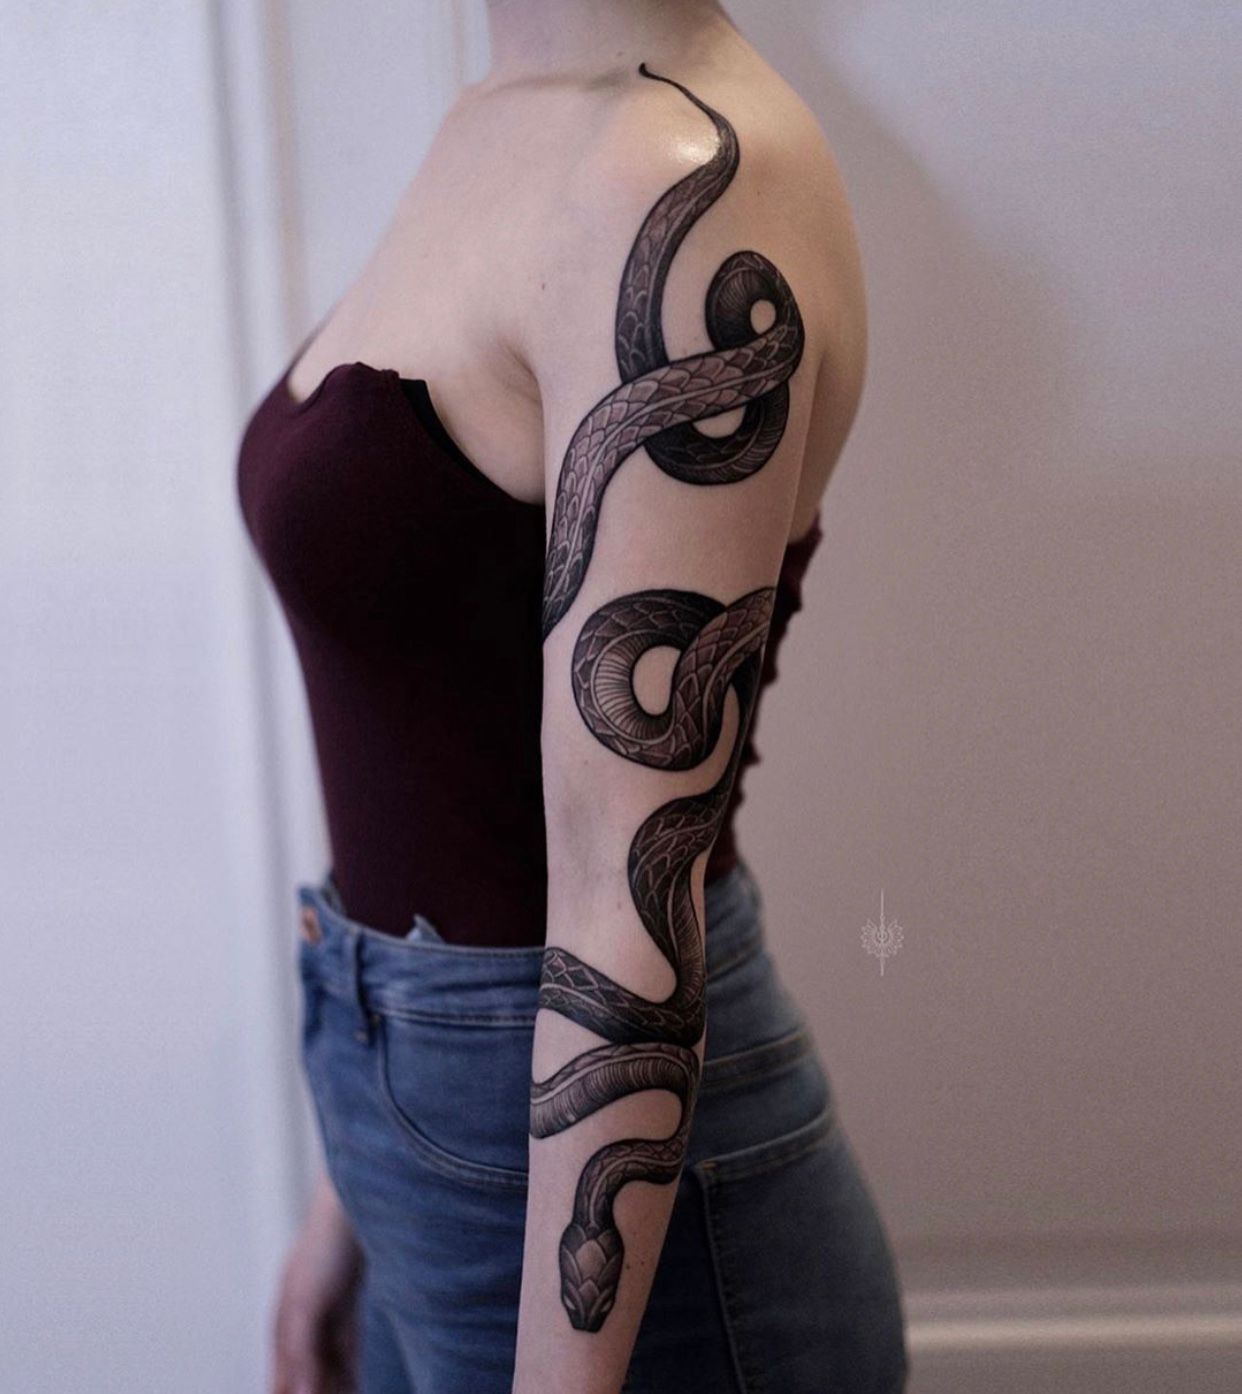 Snake tattoo | 55 Inspiring Snake Tattoos for Both Men and Women | Cute  tattoos, Tattoos for women, Small tattoos